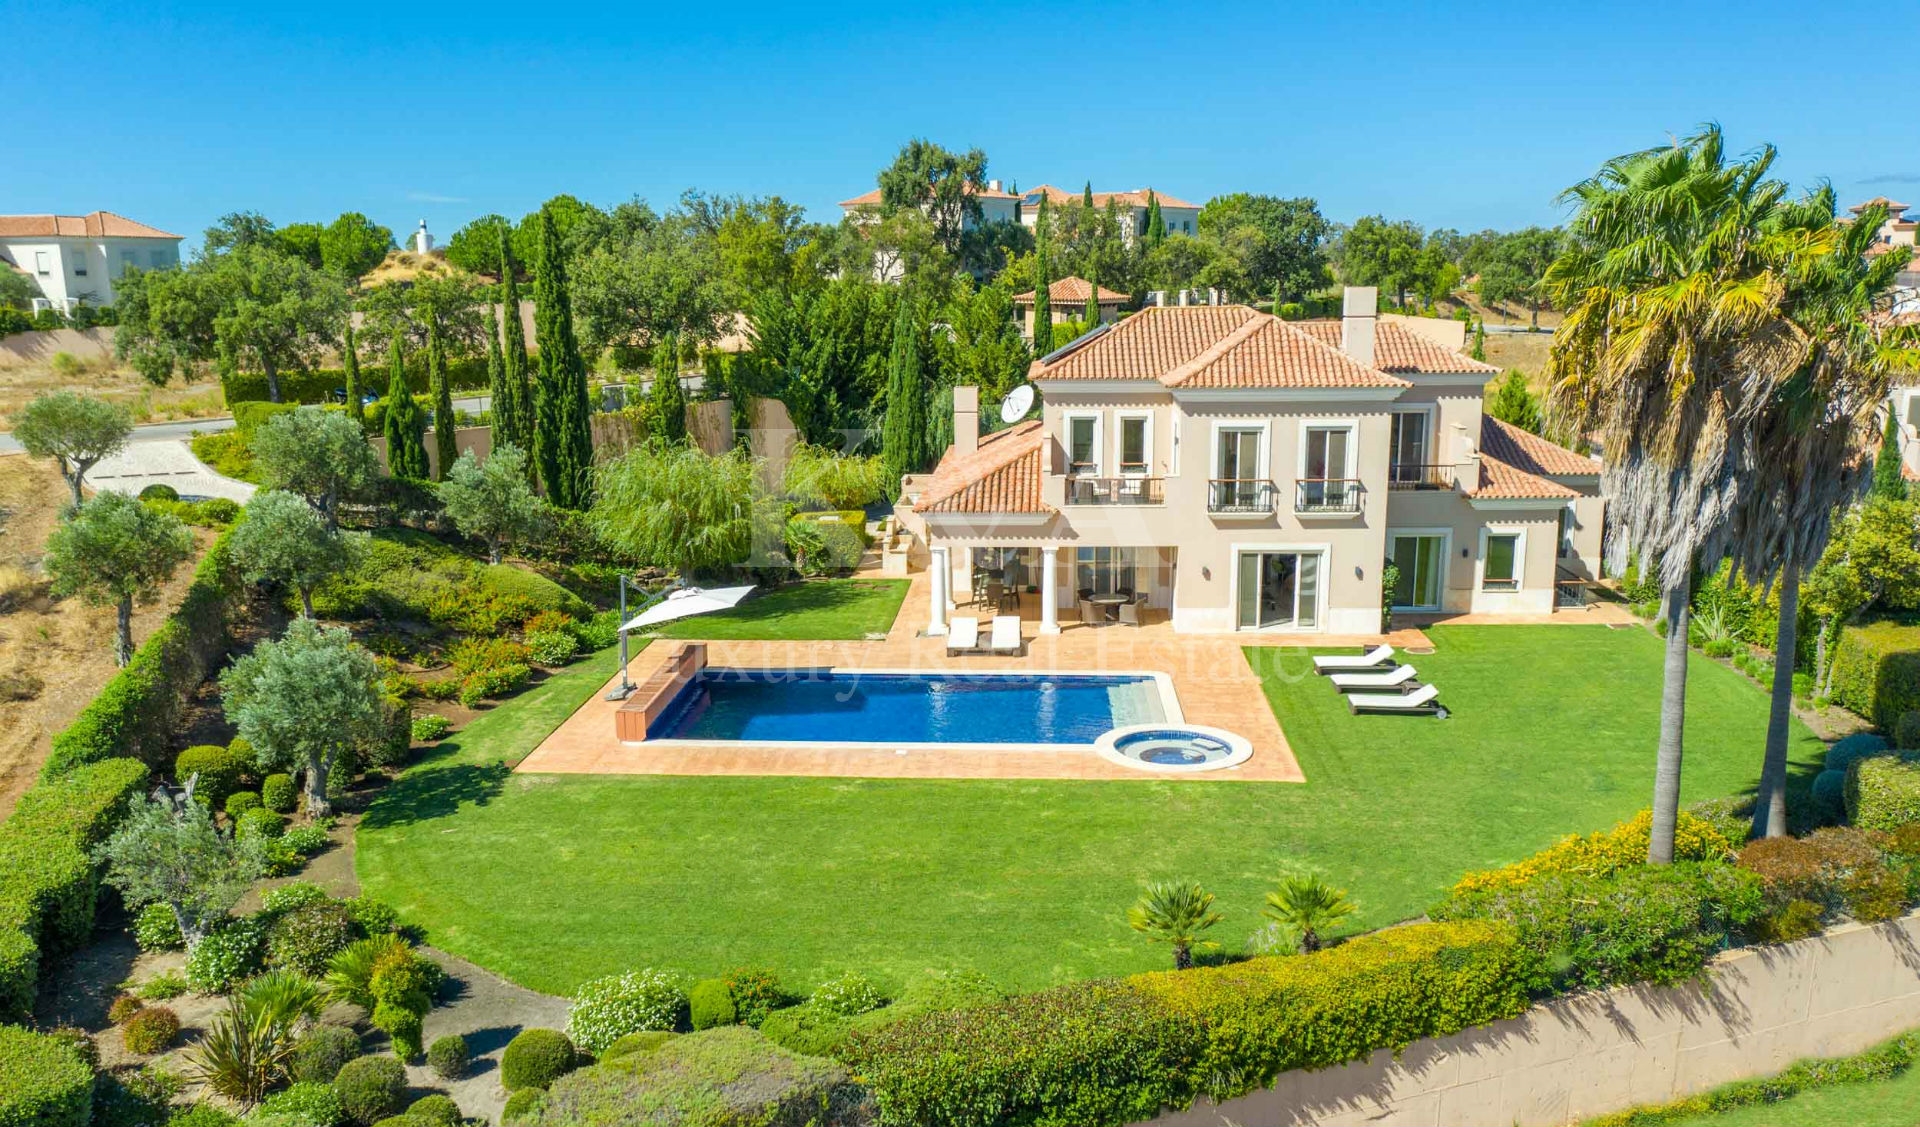 5 Bedroom villa in an exclusive golf resort, Algarve